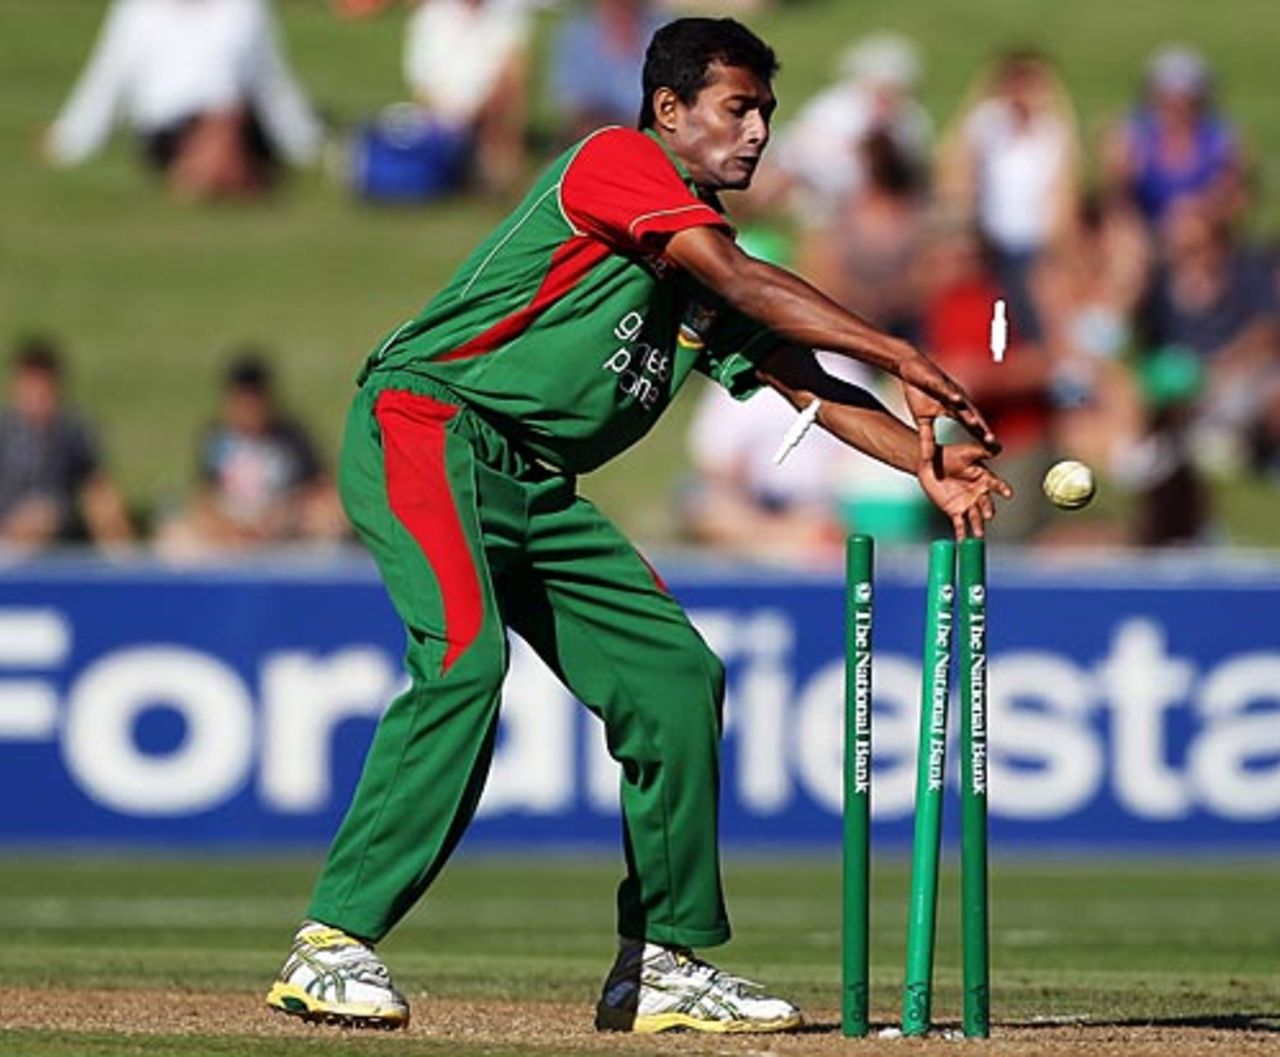 Shafiul Islam breaks the stumps, New Zealand v Bangladesh, 1st ODI, Napier, February 5, 2010